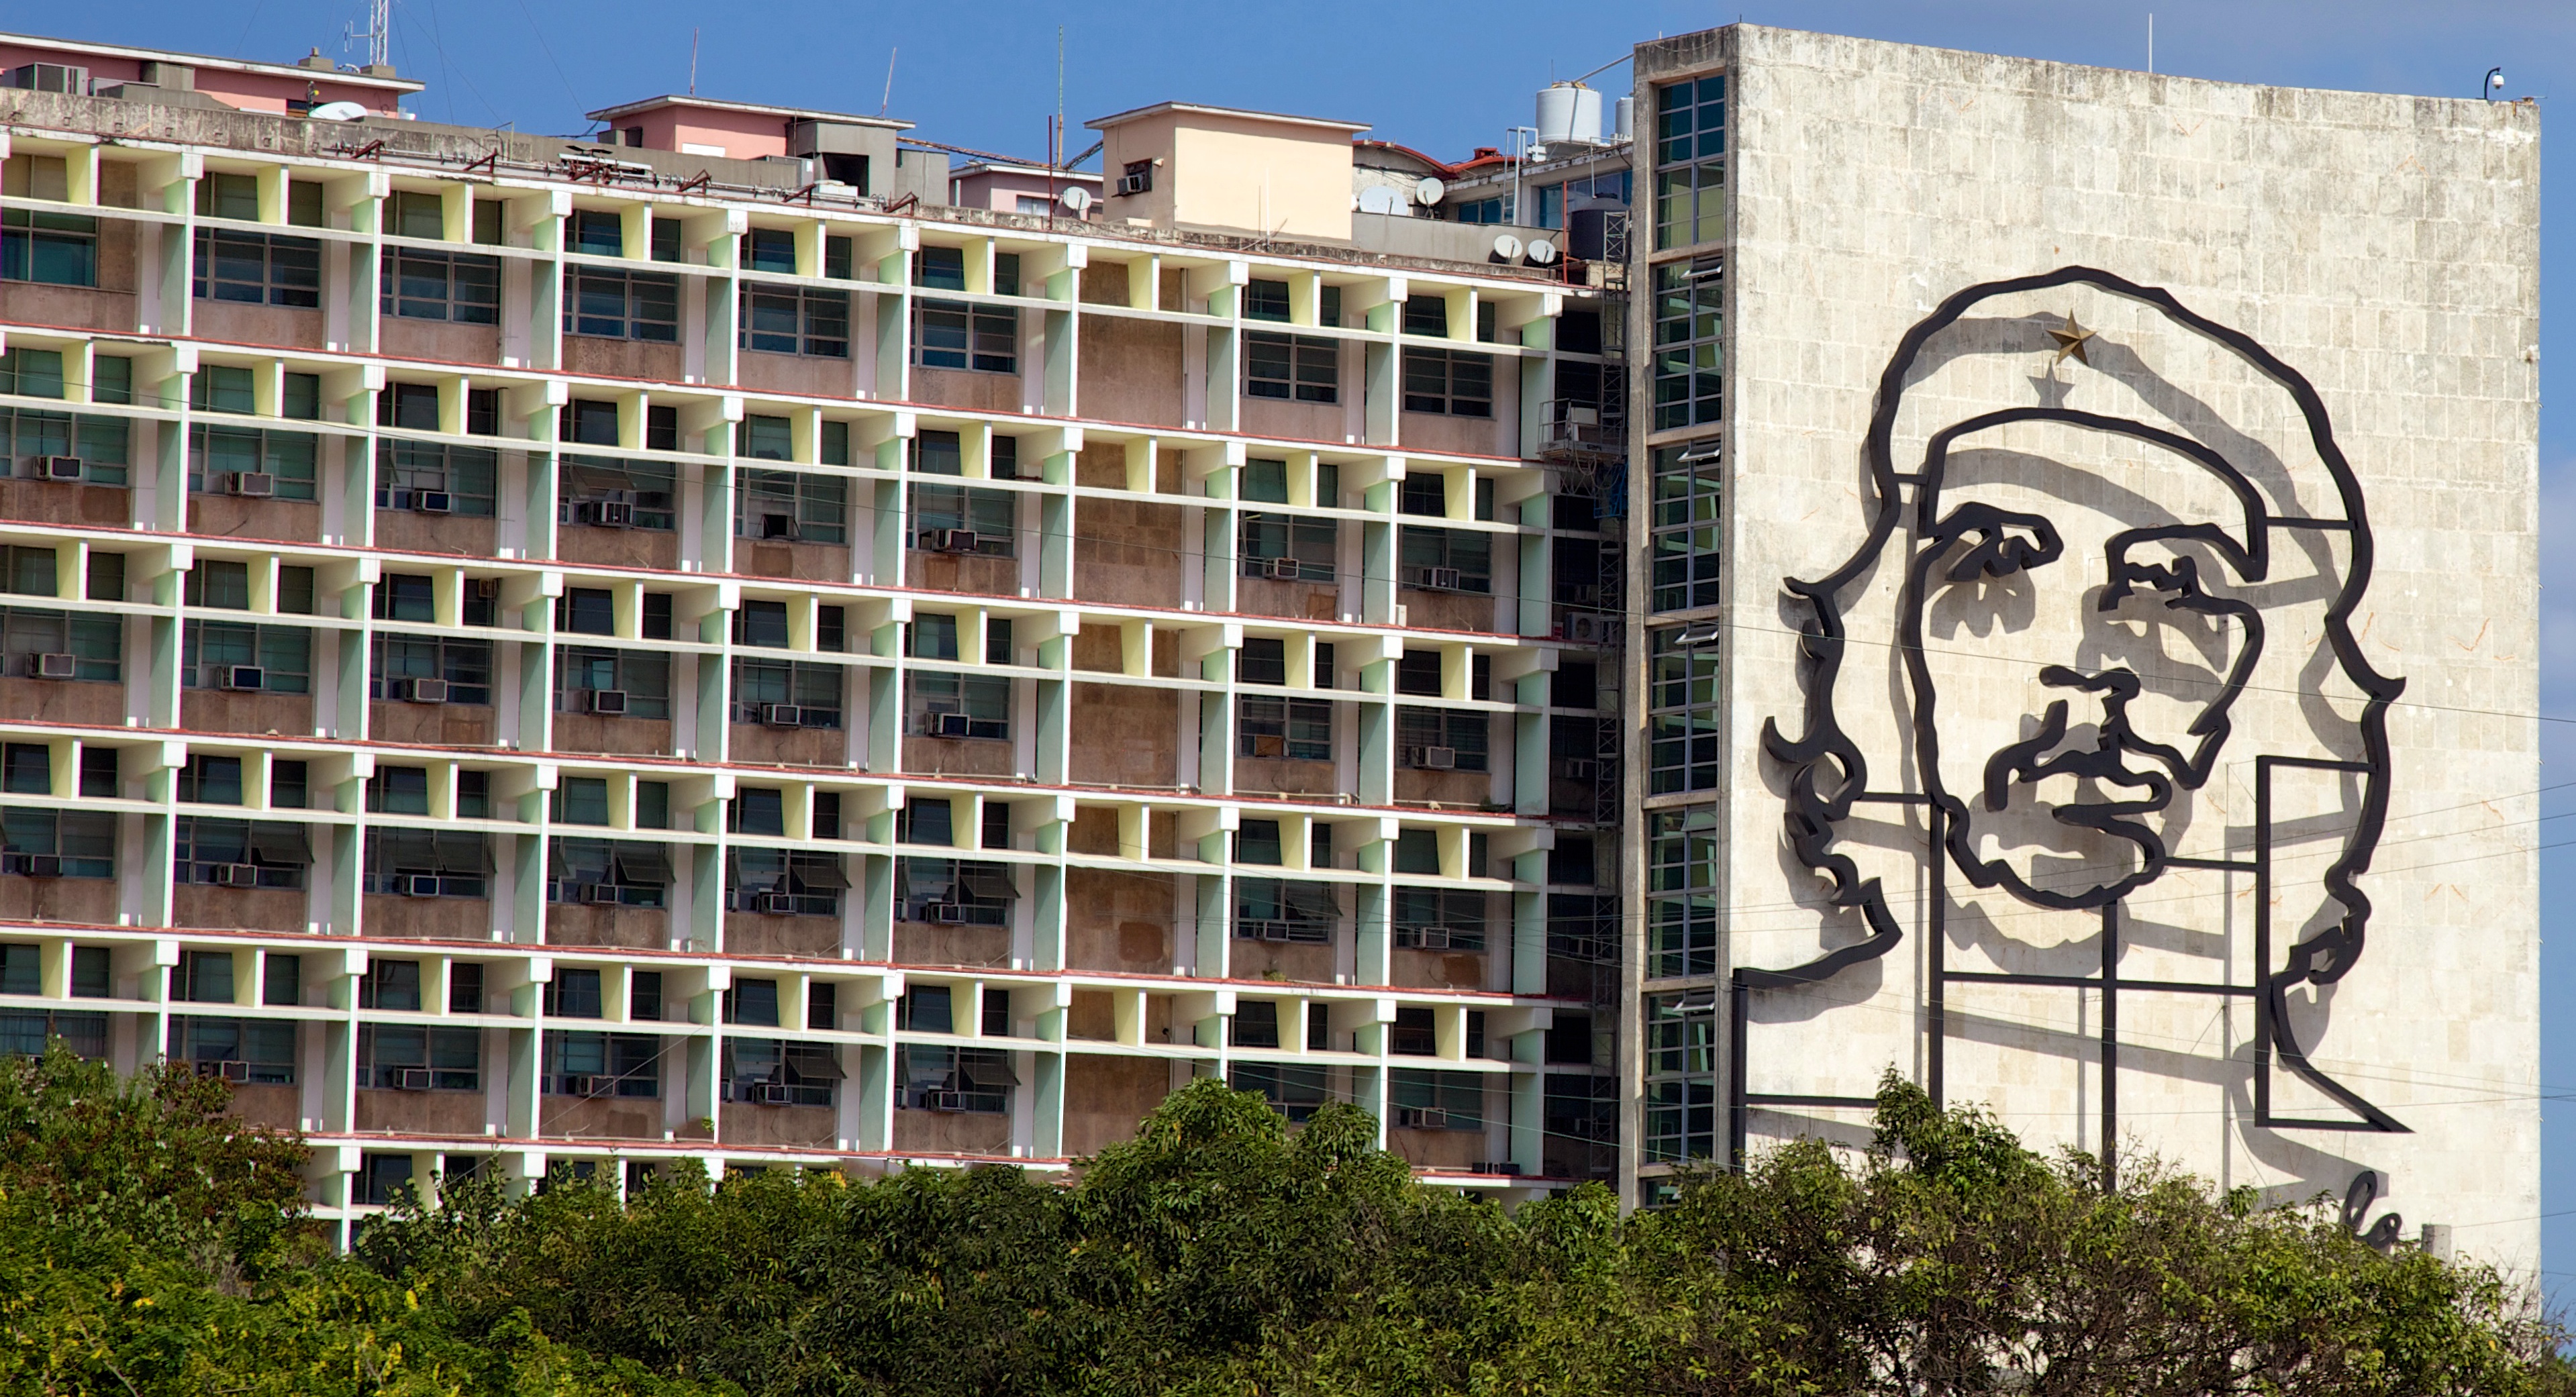 Ministry of the Interior with image of Che Guevara, Havana, photo by Nicolas de Camaret, Flickr, CC BY 2.0